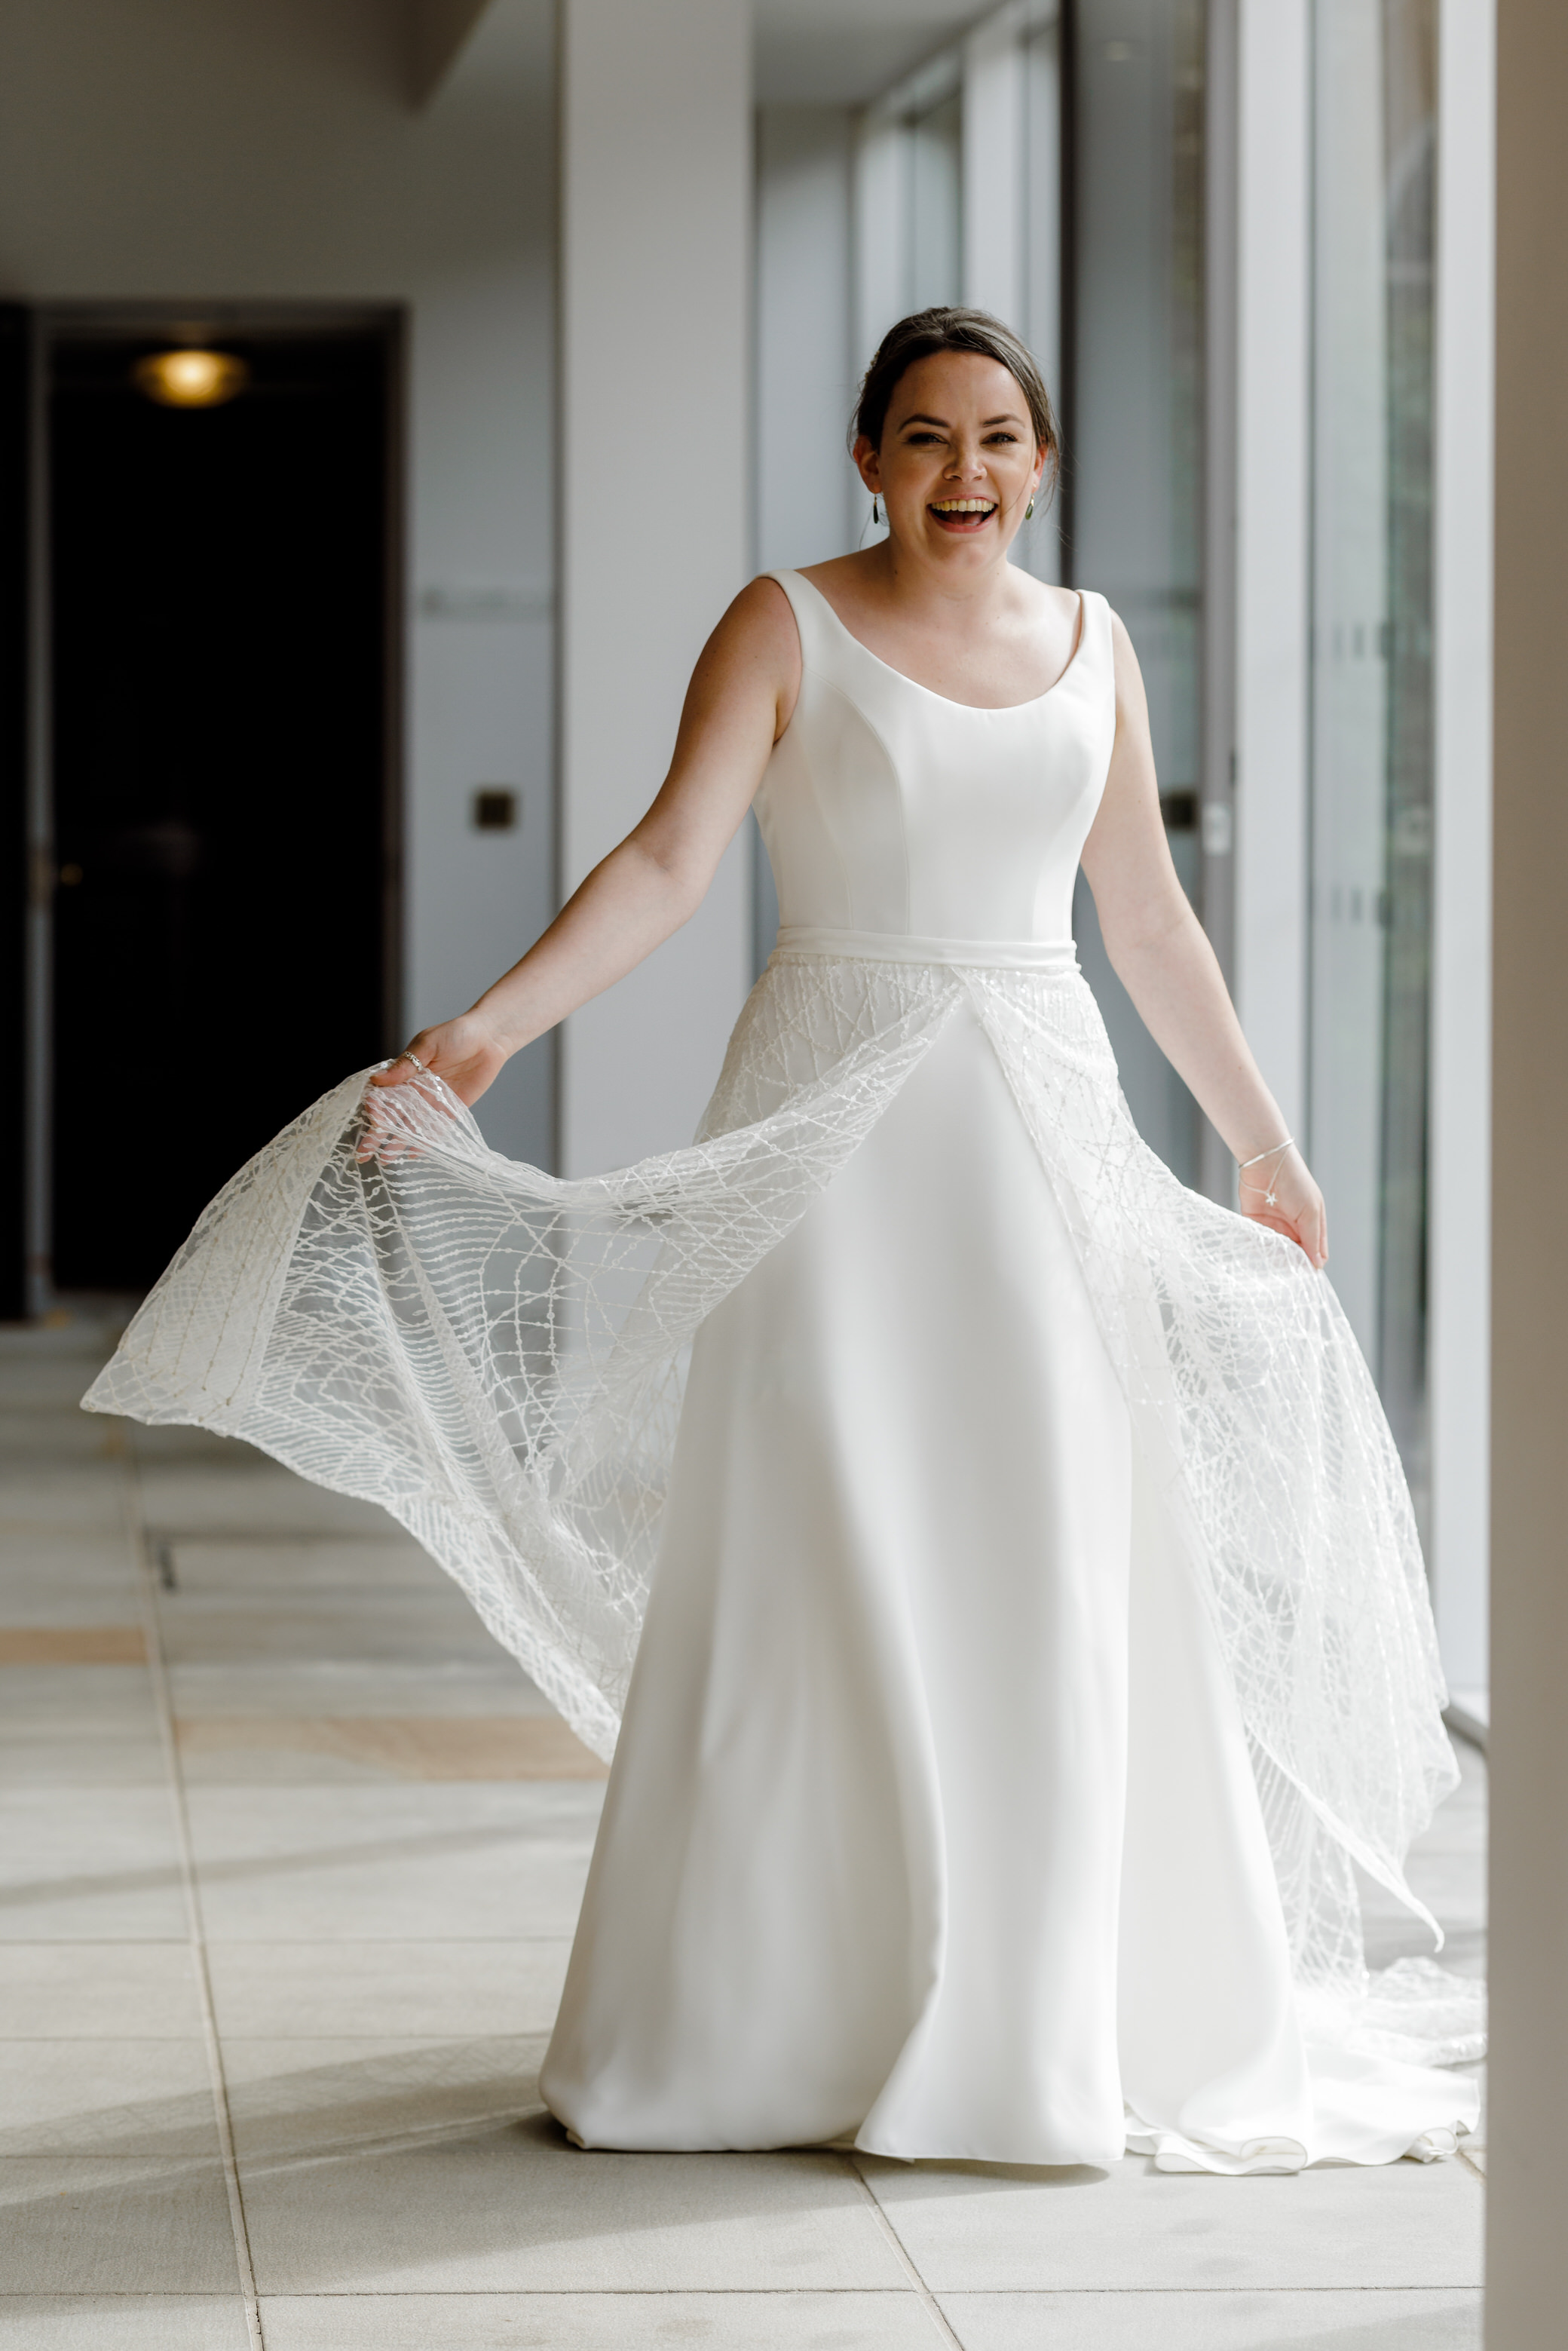 Hensol wedding - Bride in Dress